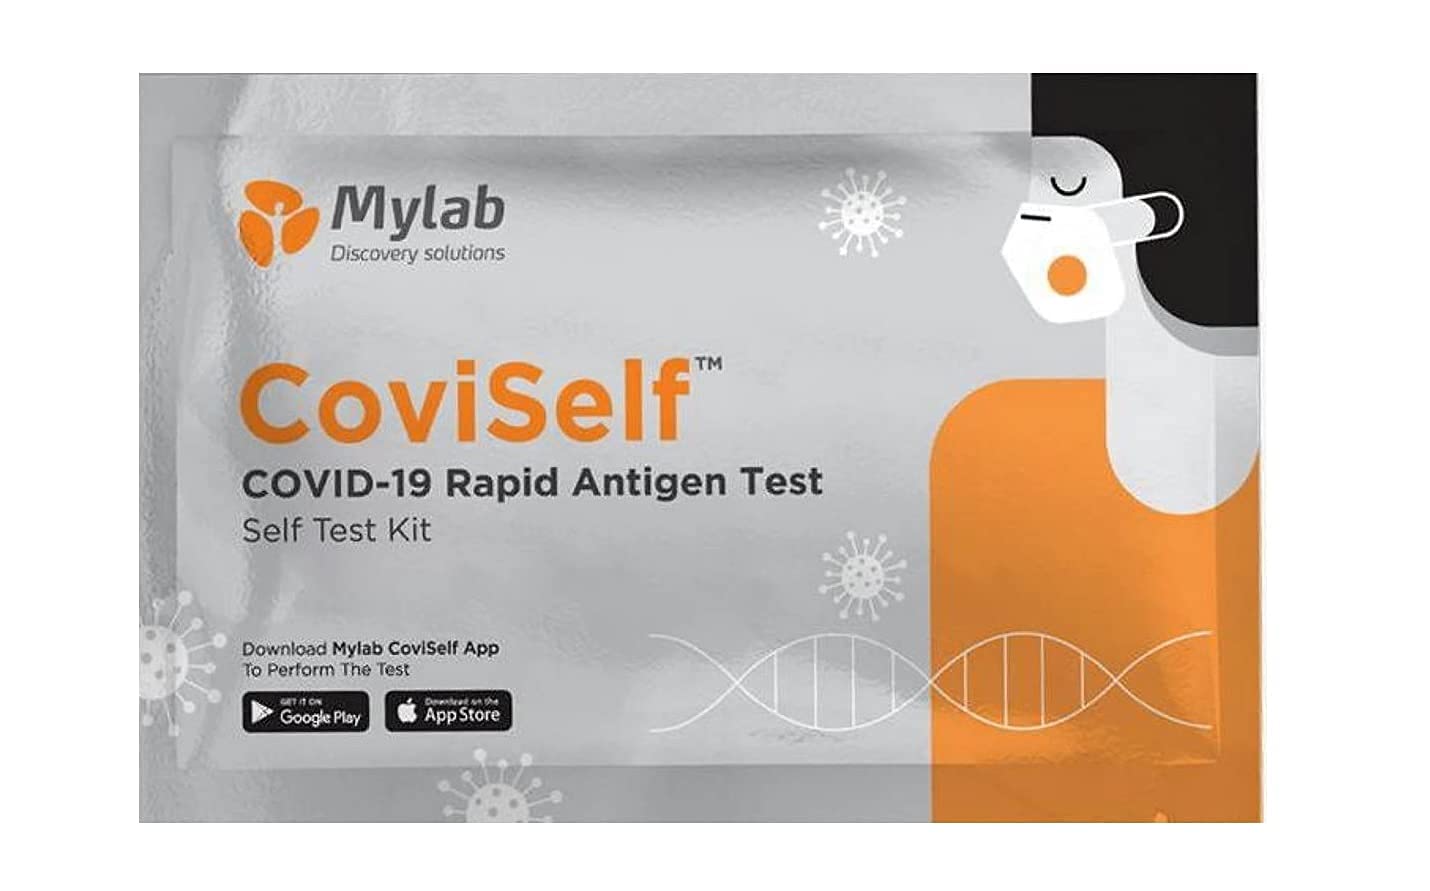 Buy Mylab CoviSelf COVID-19 Rapid Antigen Self Test Kit, 1 Count Online